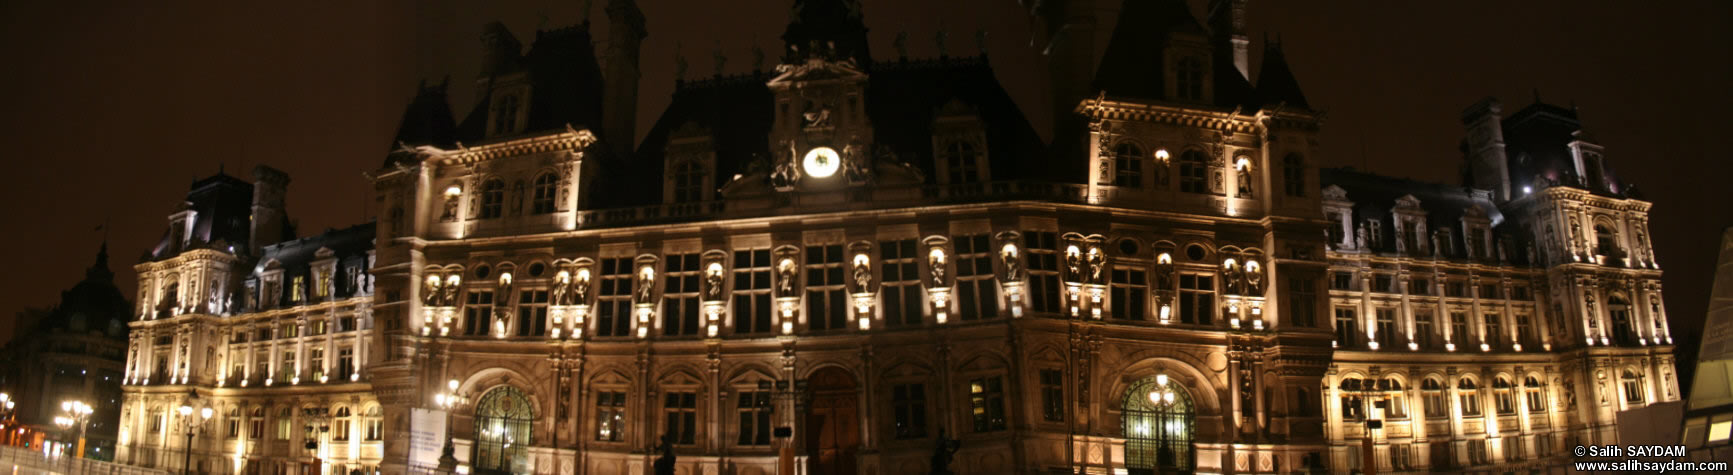 City Hall of Paris (Hôtel de Ville) Panorama 1 (At Night) (Paris, France)